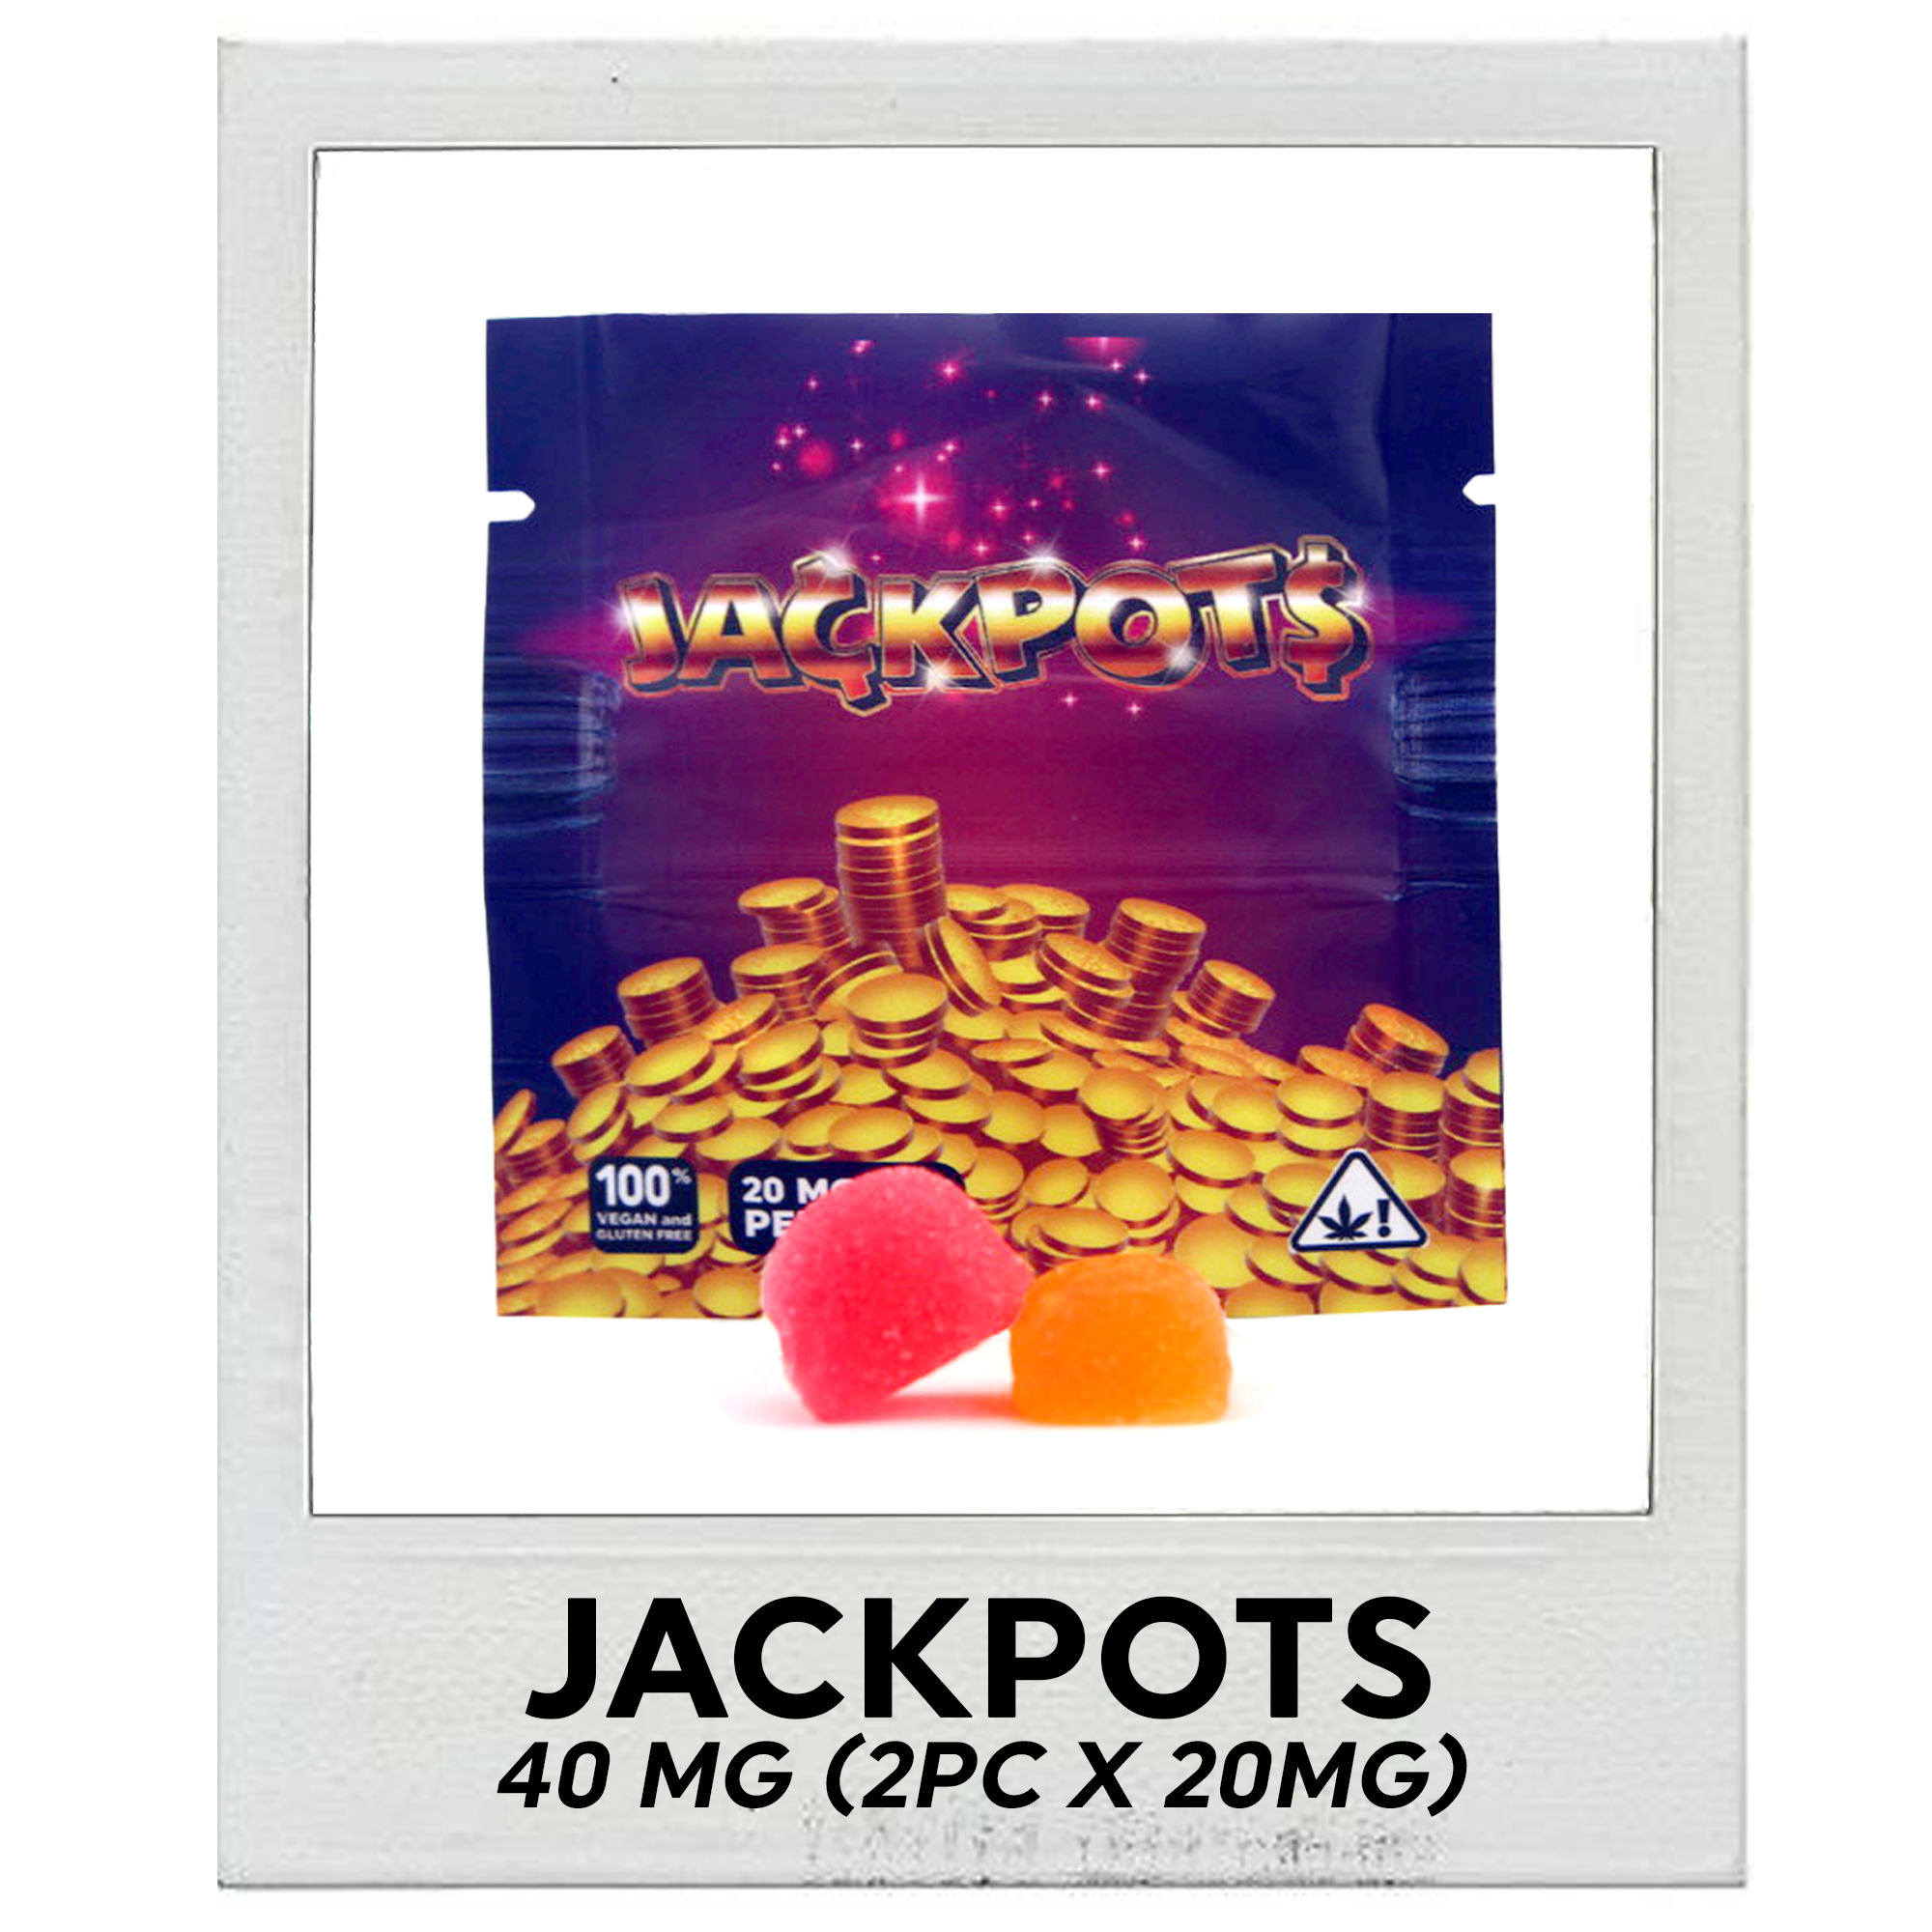 Jackpots - 40mg (2pc x 20mg)